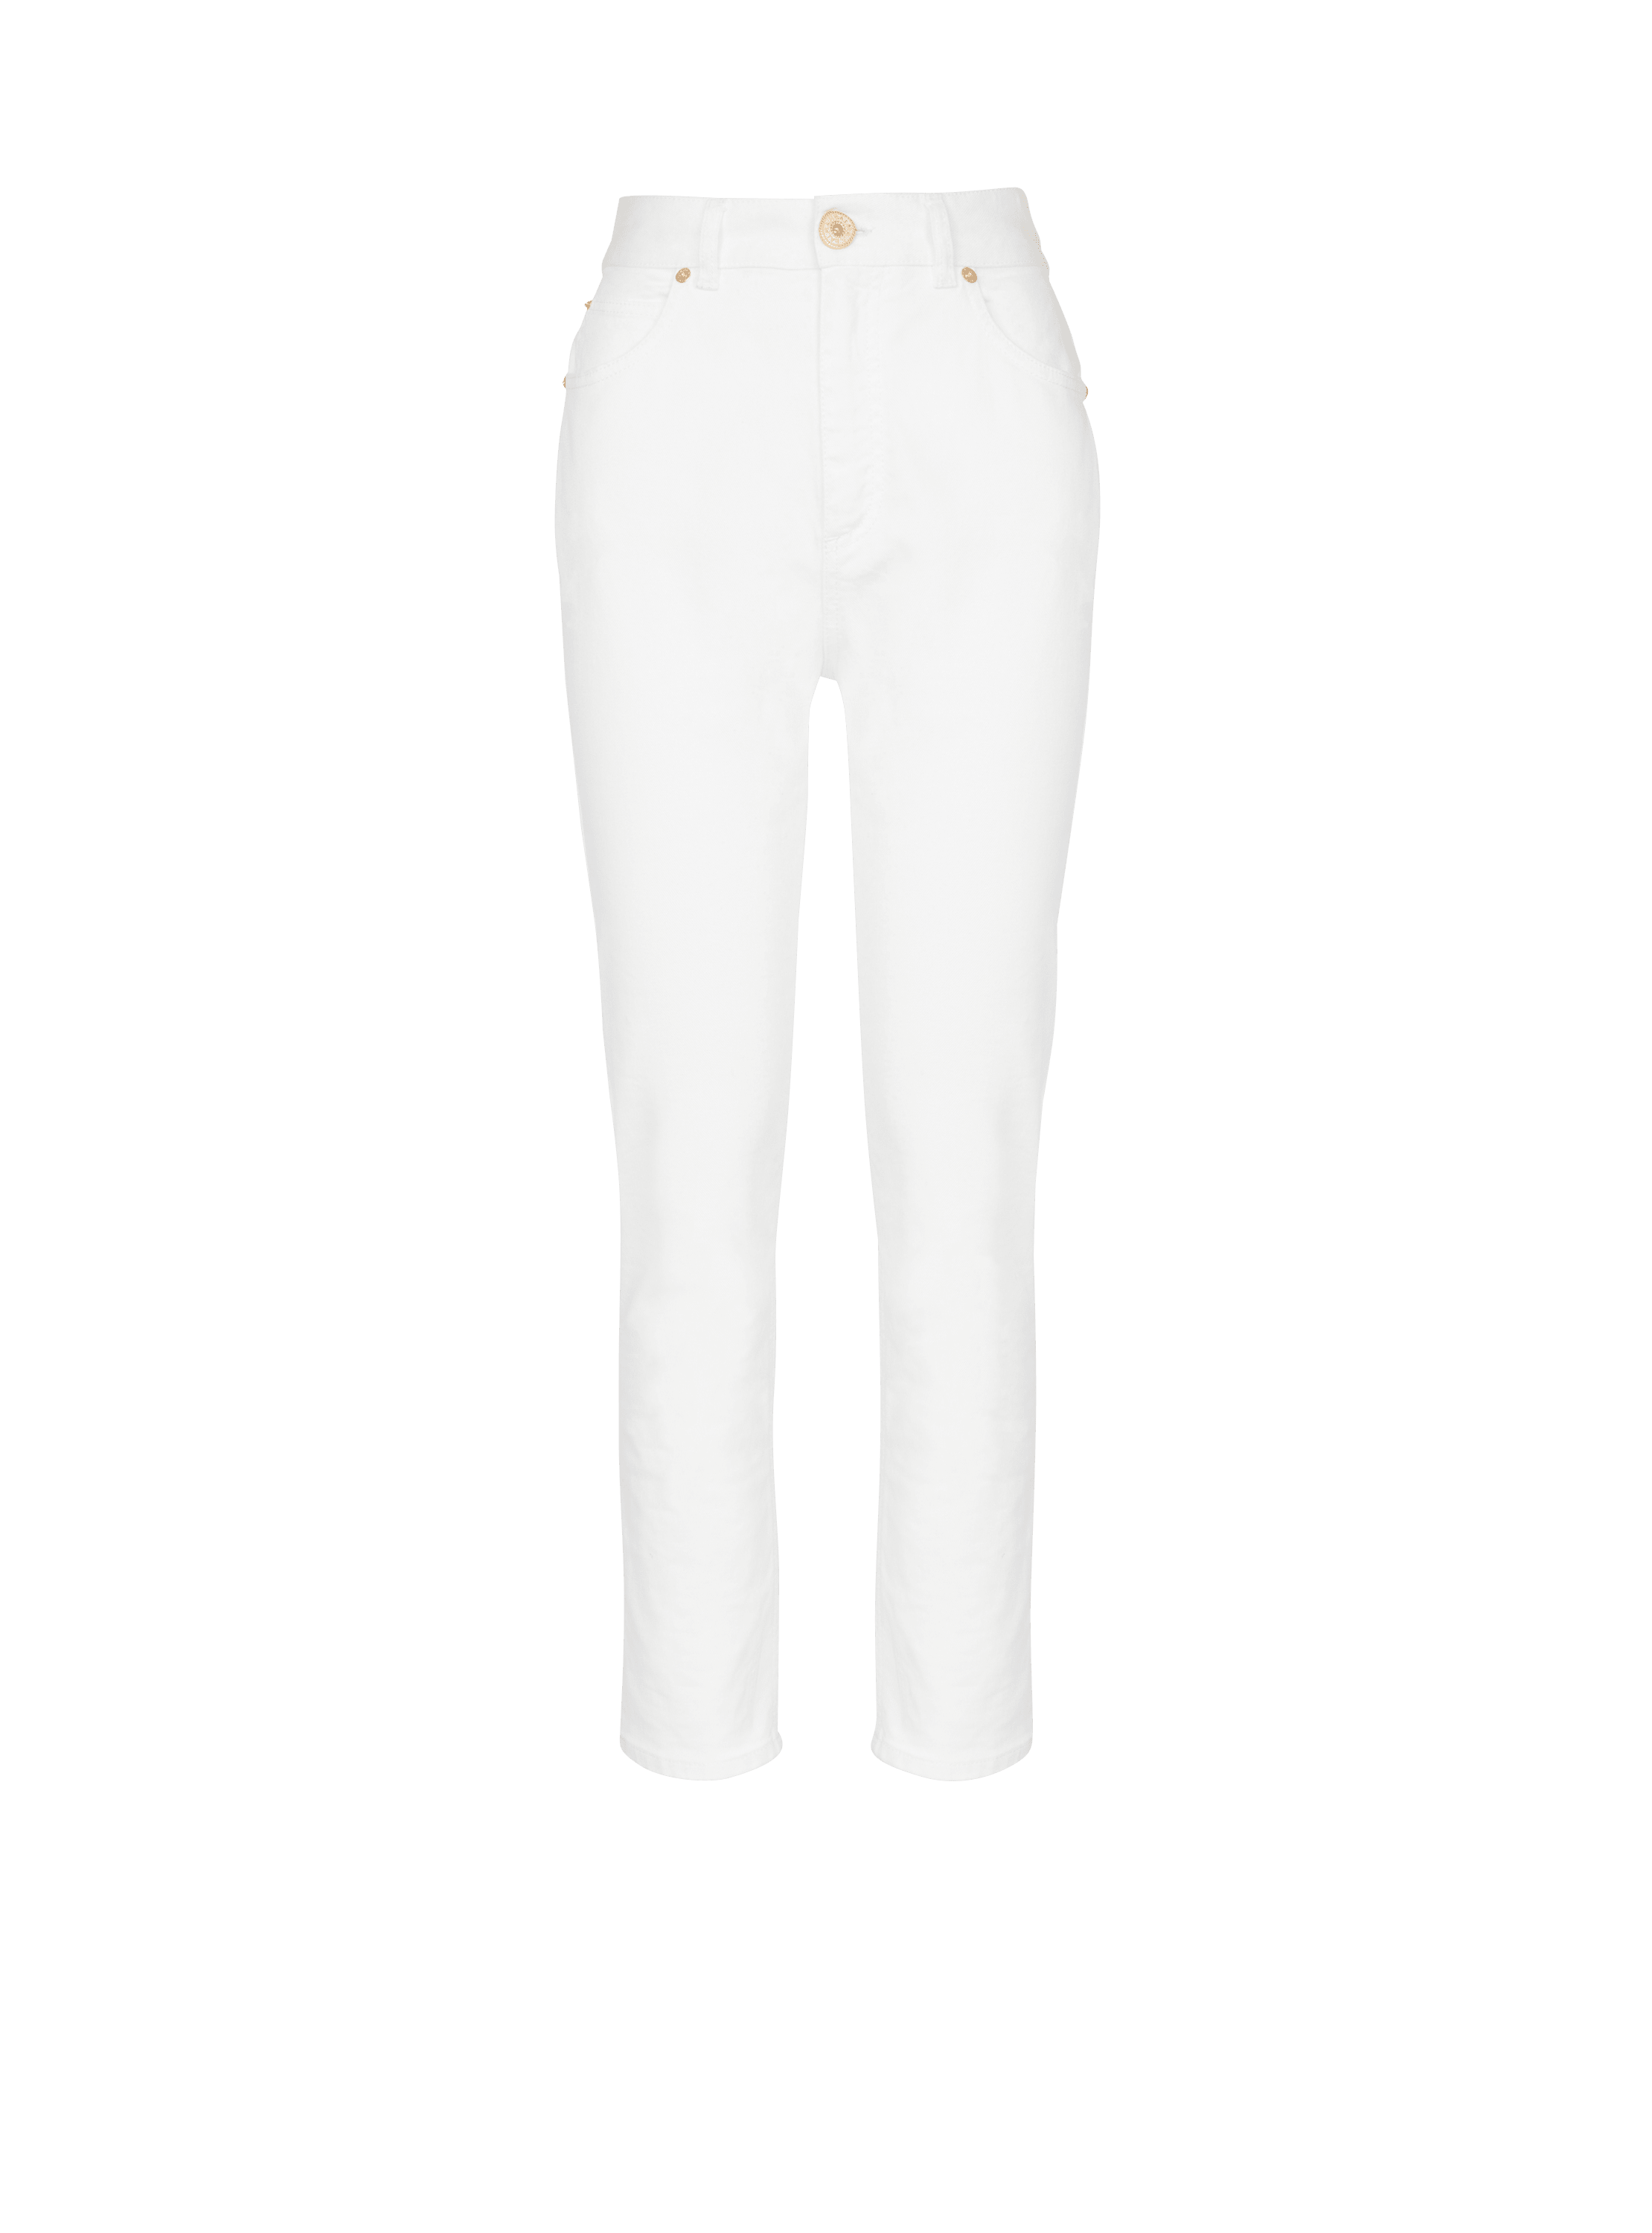 Slim fit jeans, white, hi-res